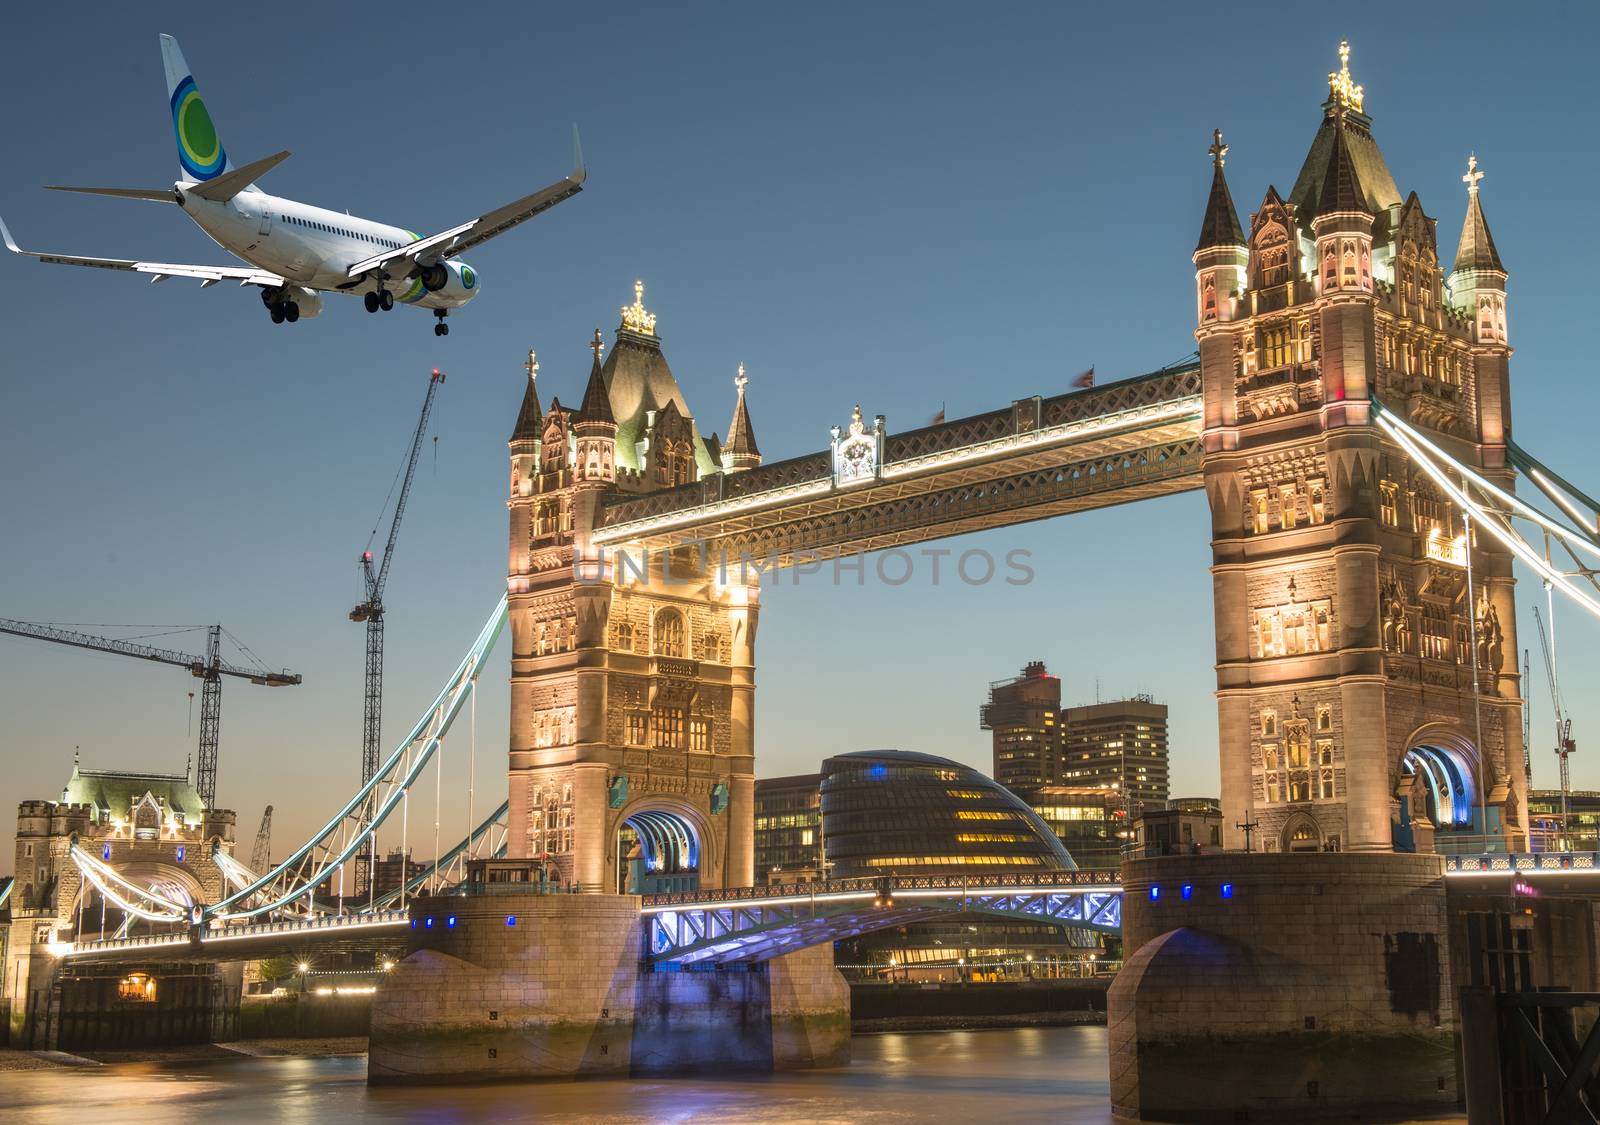 Airplane overflying London.